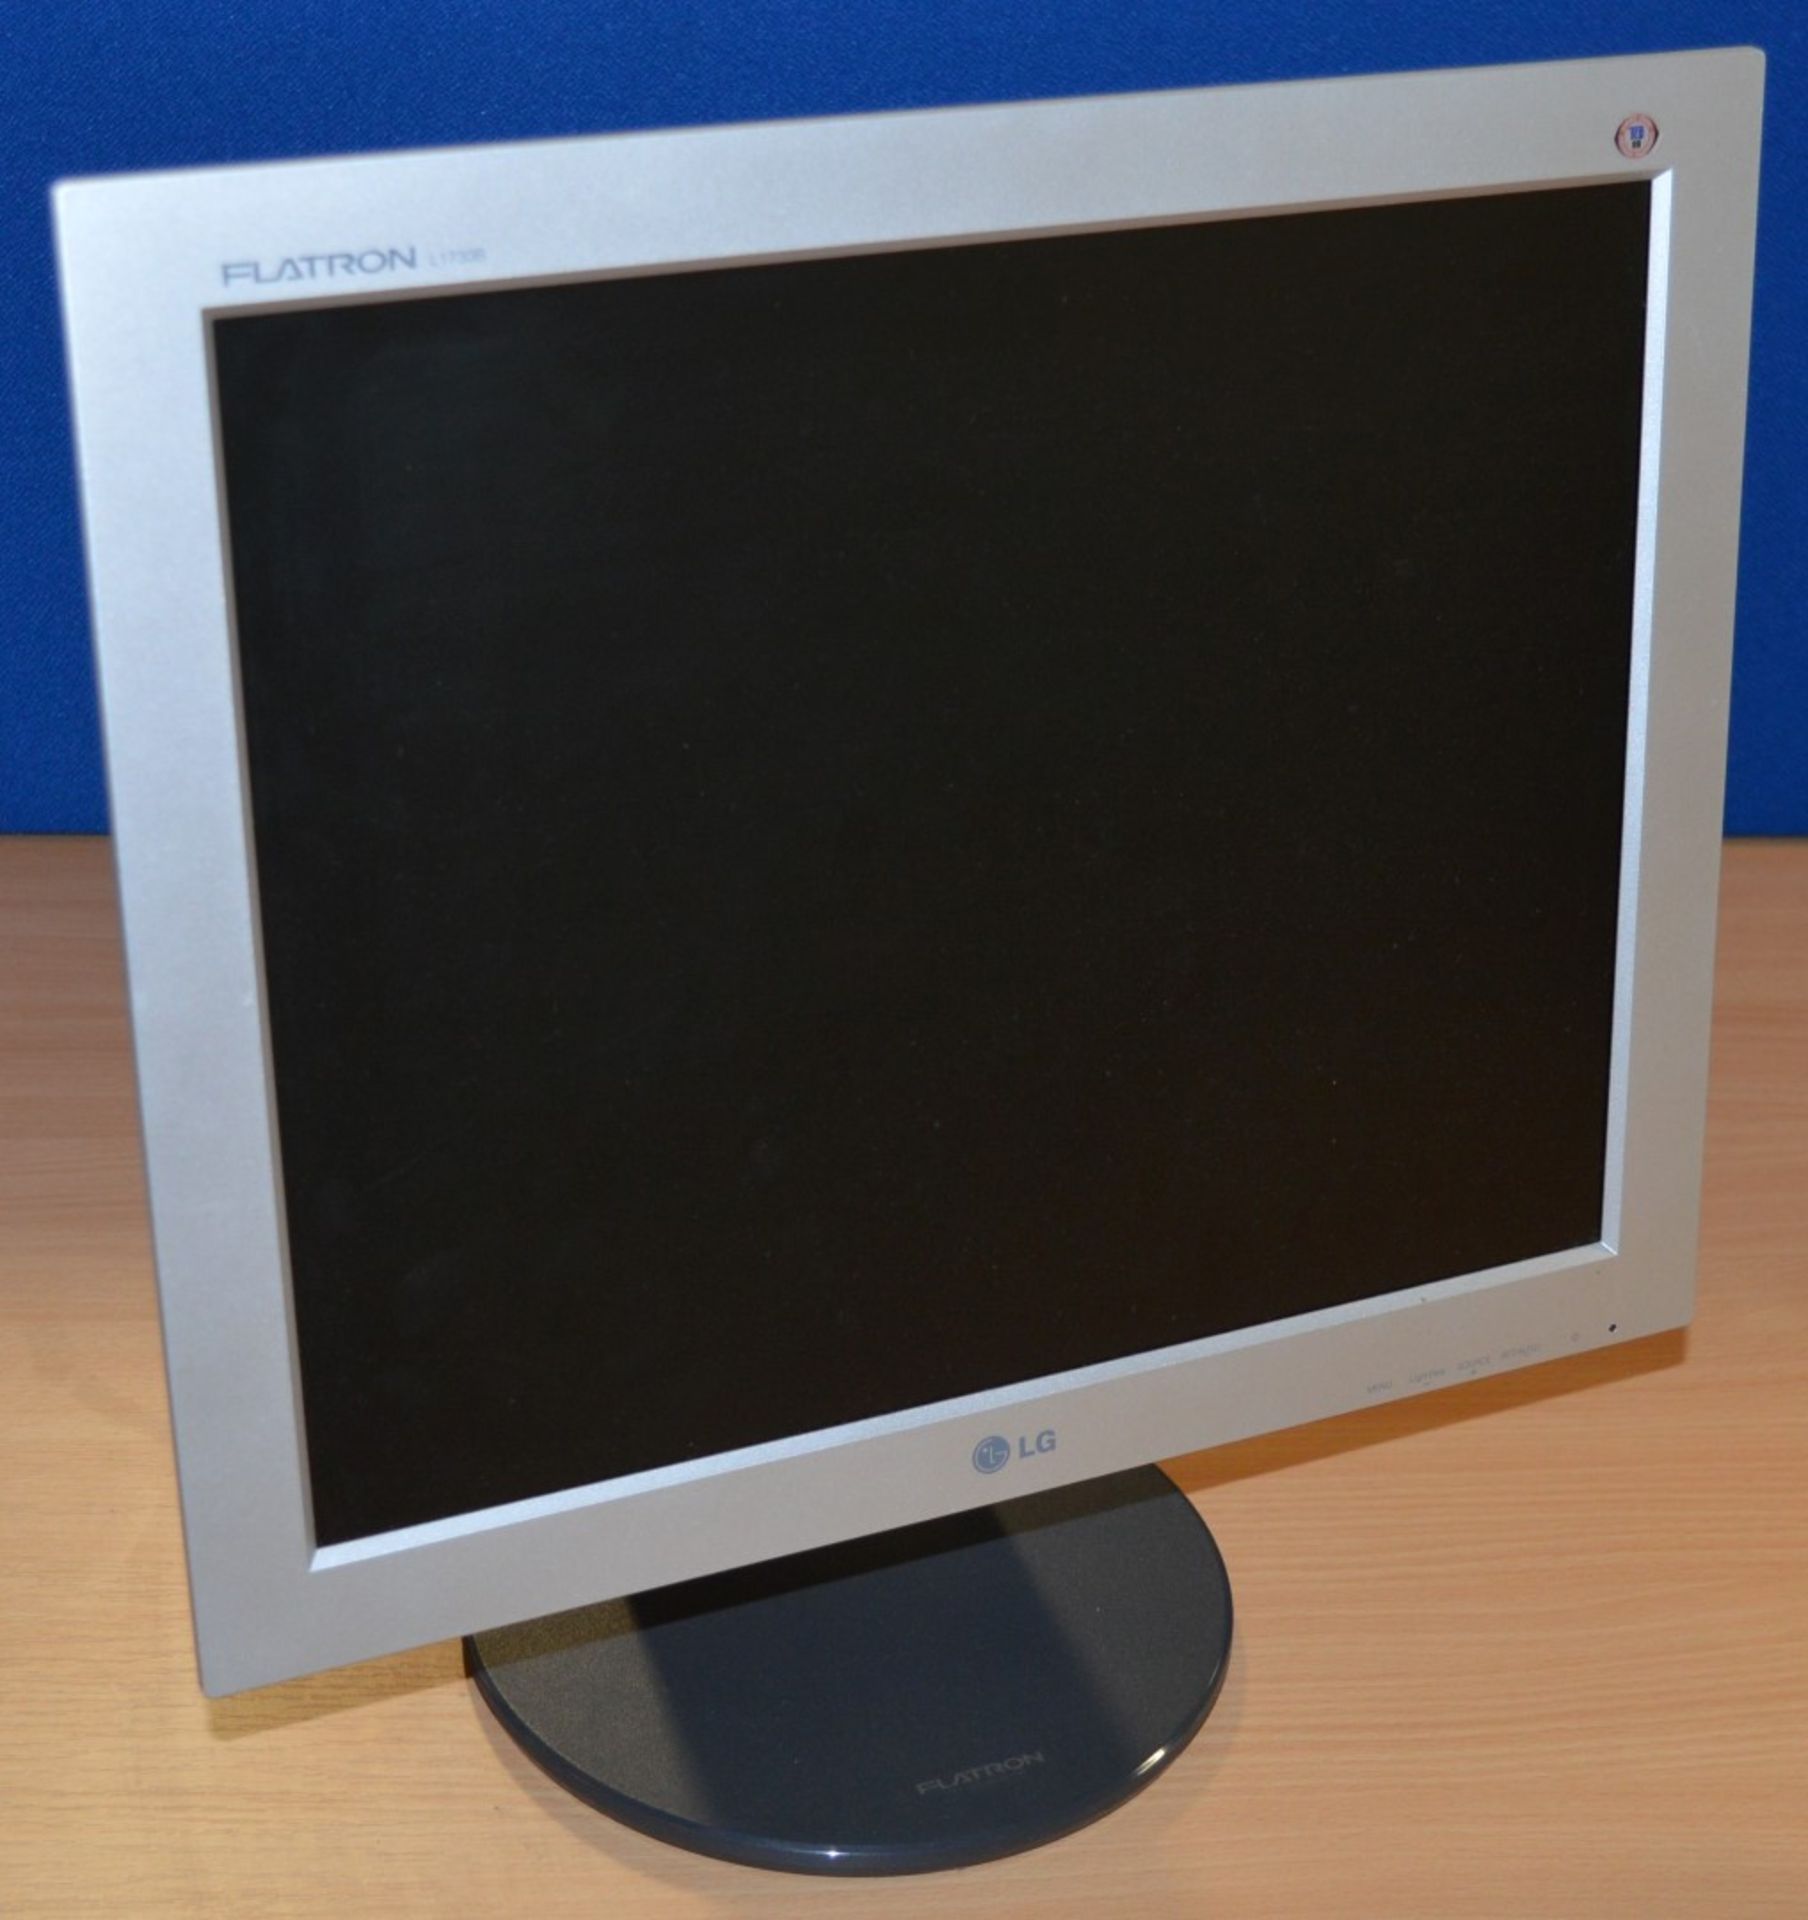 4 x LG Flatron L1730B Flatscreen TFT  Monitors - 17 Inch Screen Size - 1280 x 1024 Native Resolution - Image 2 of 5